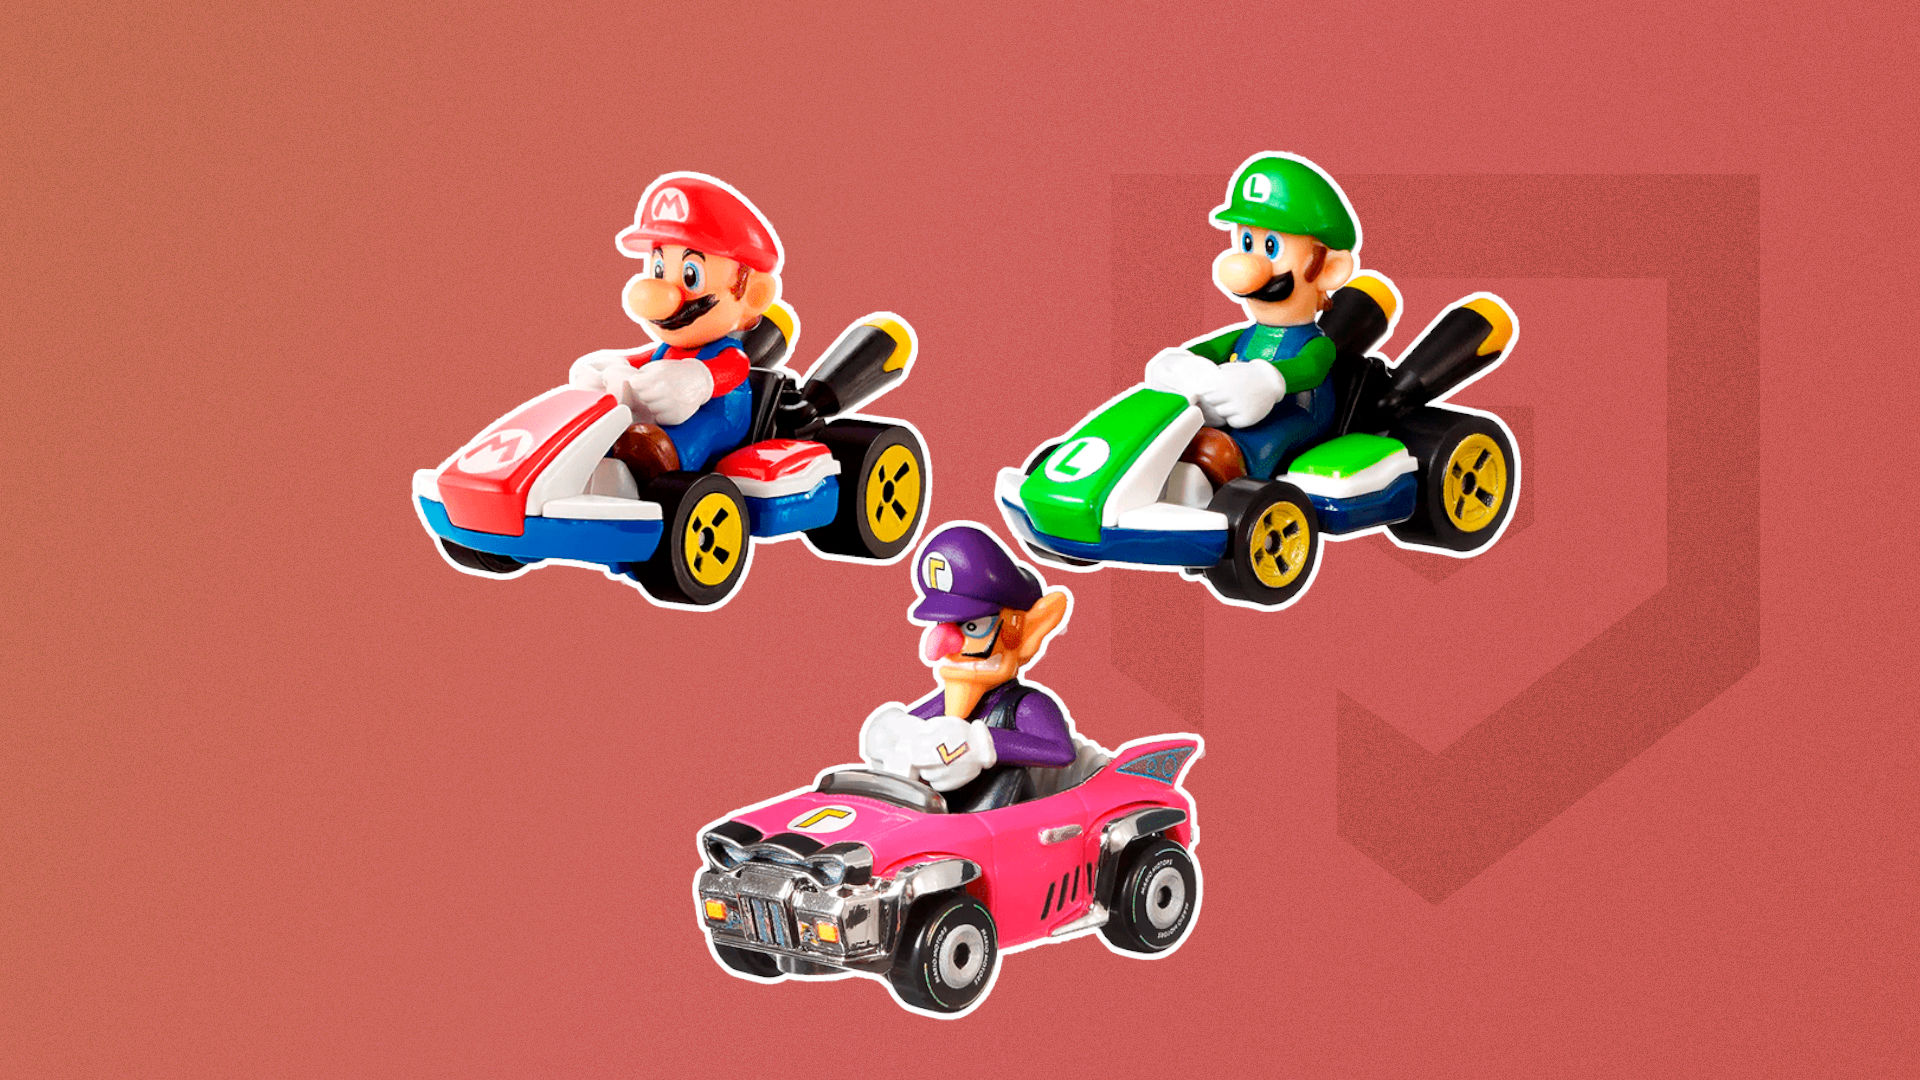 Hot Wheels Mario Kart  Nintendo Circuit! 